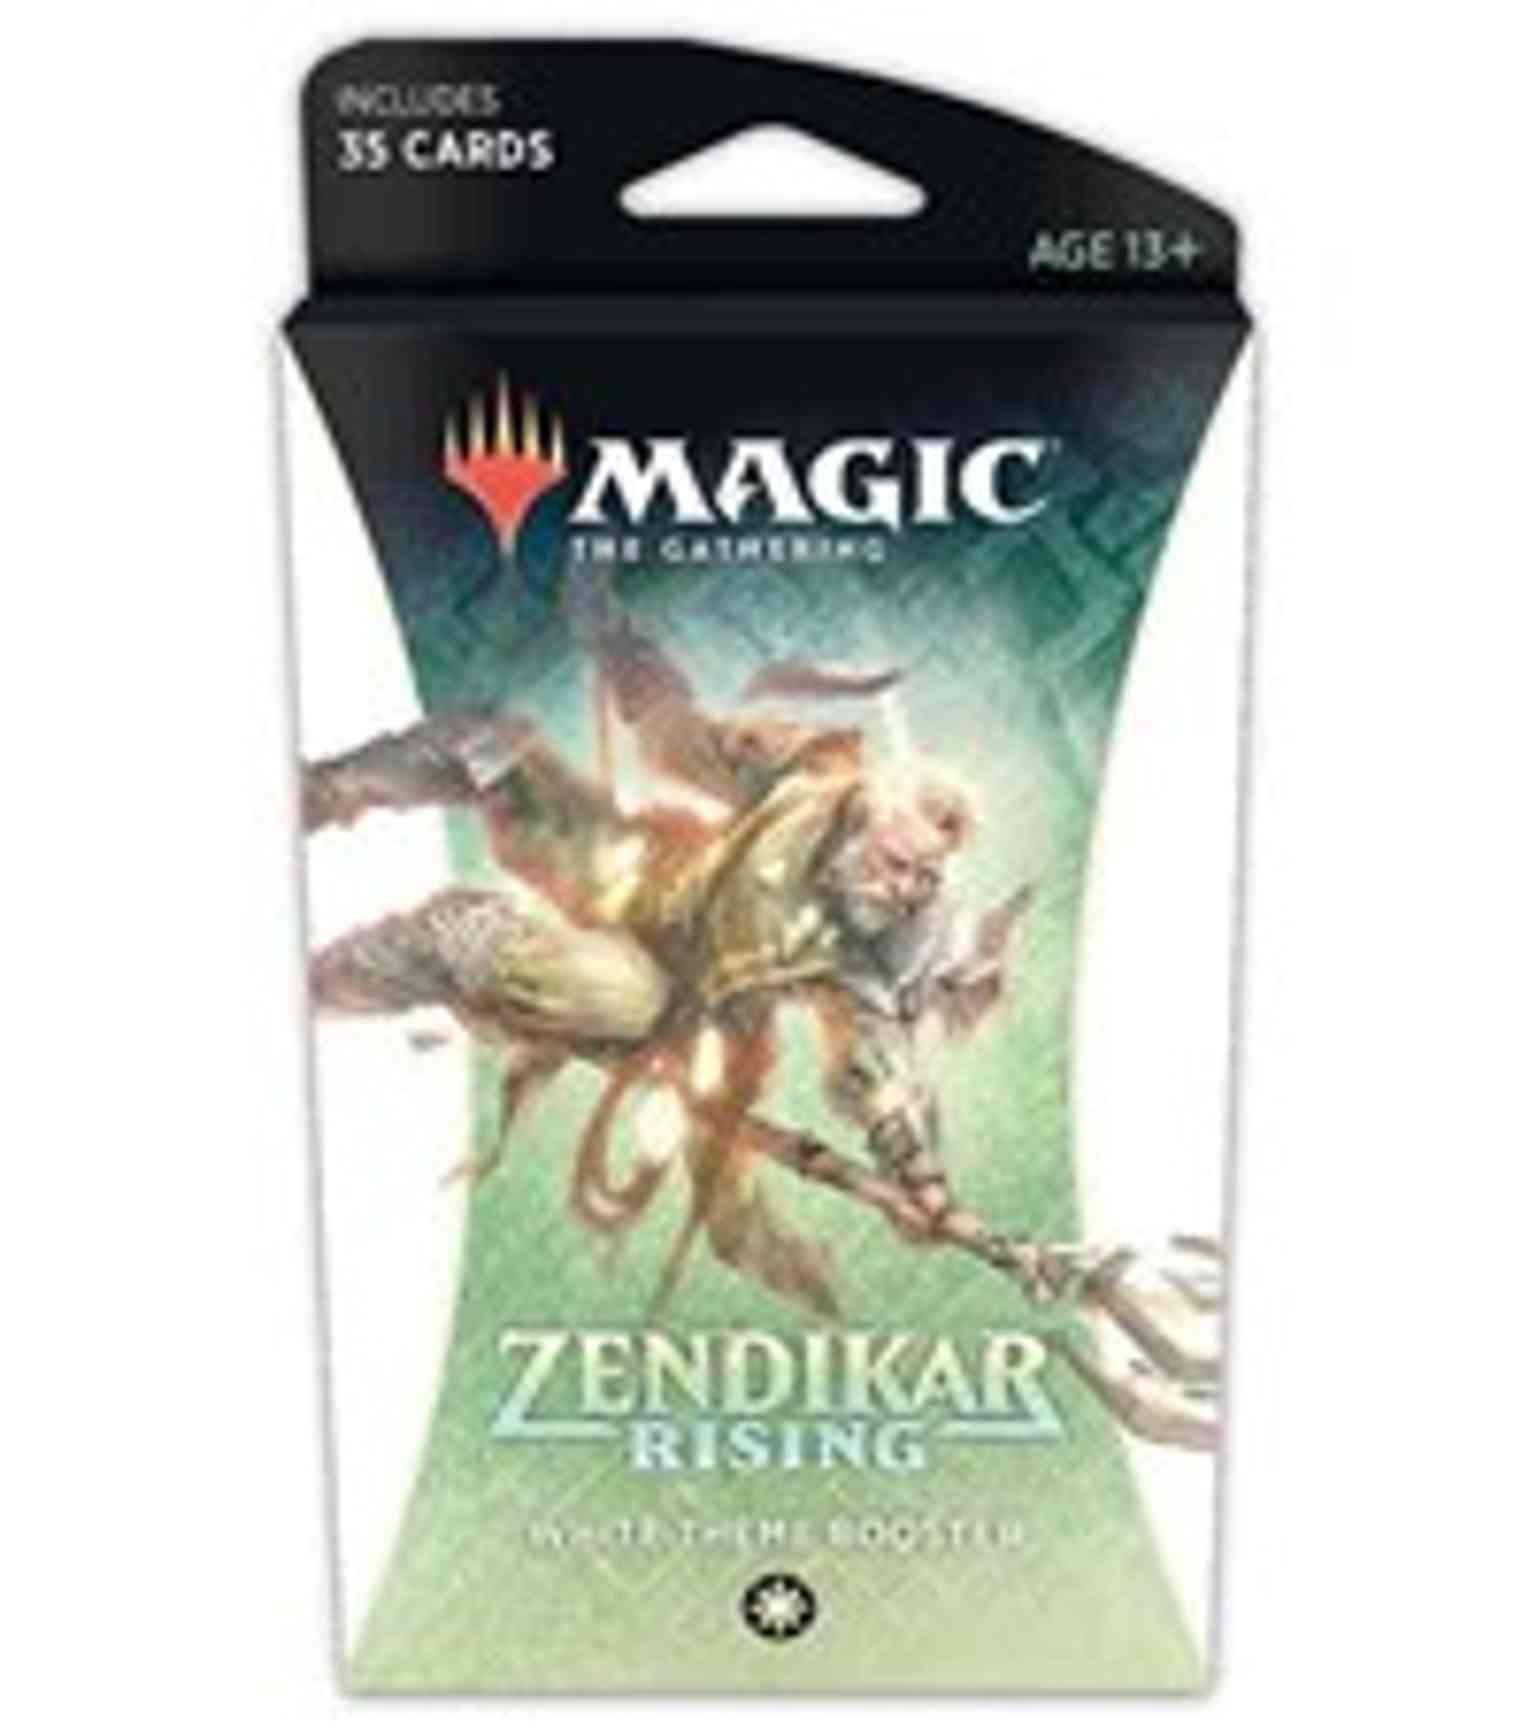 Zendikar Rising - Theme Booster [White] magic card front